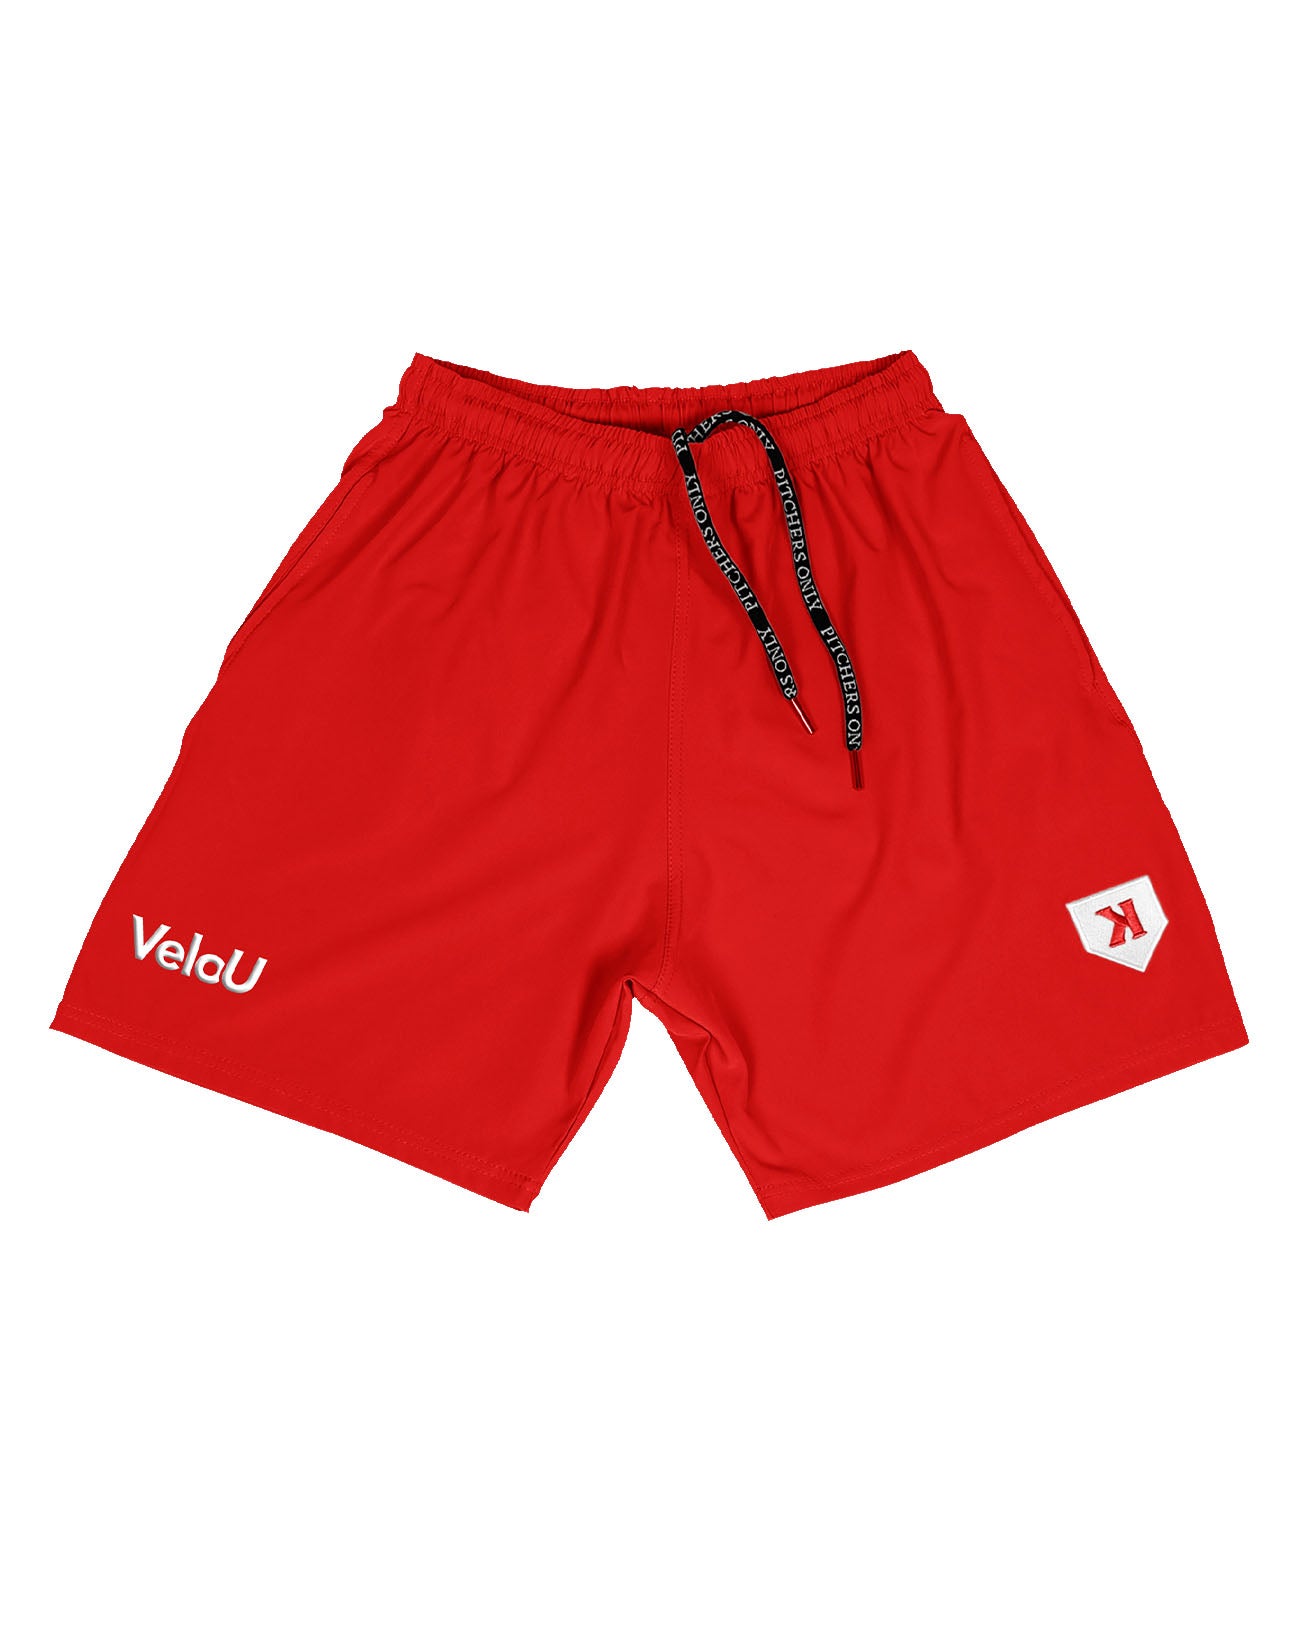 Velo Unlocked Training Shorts